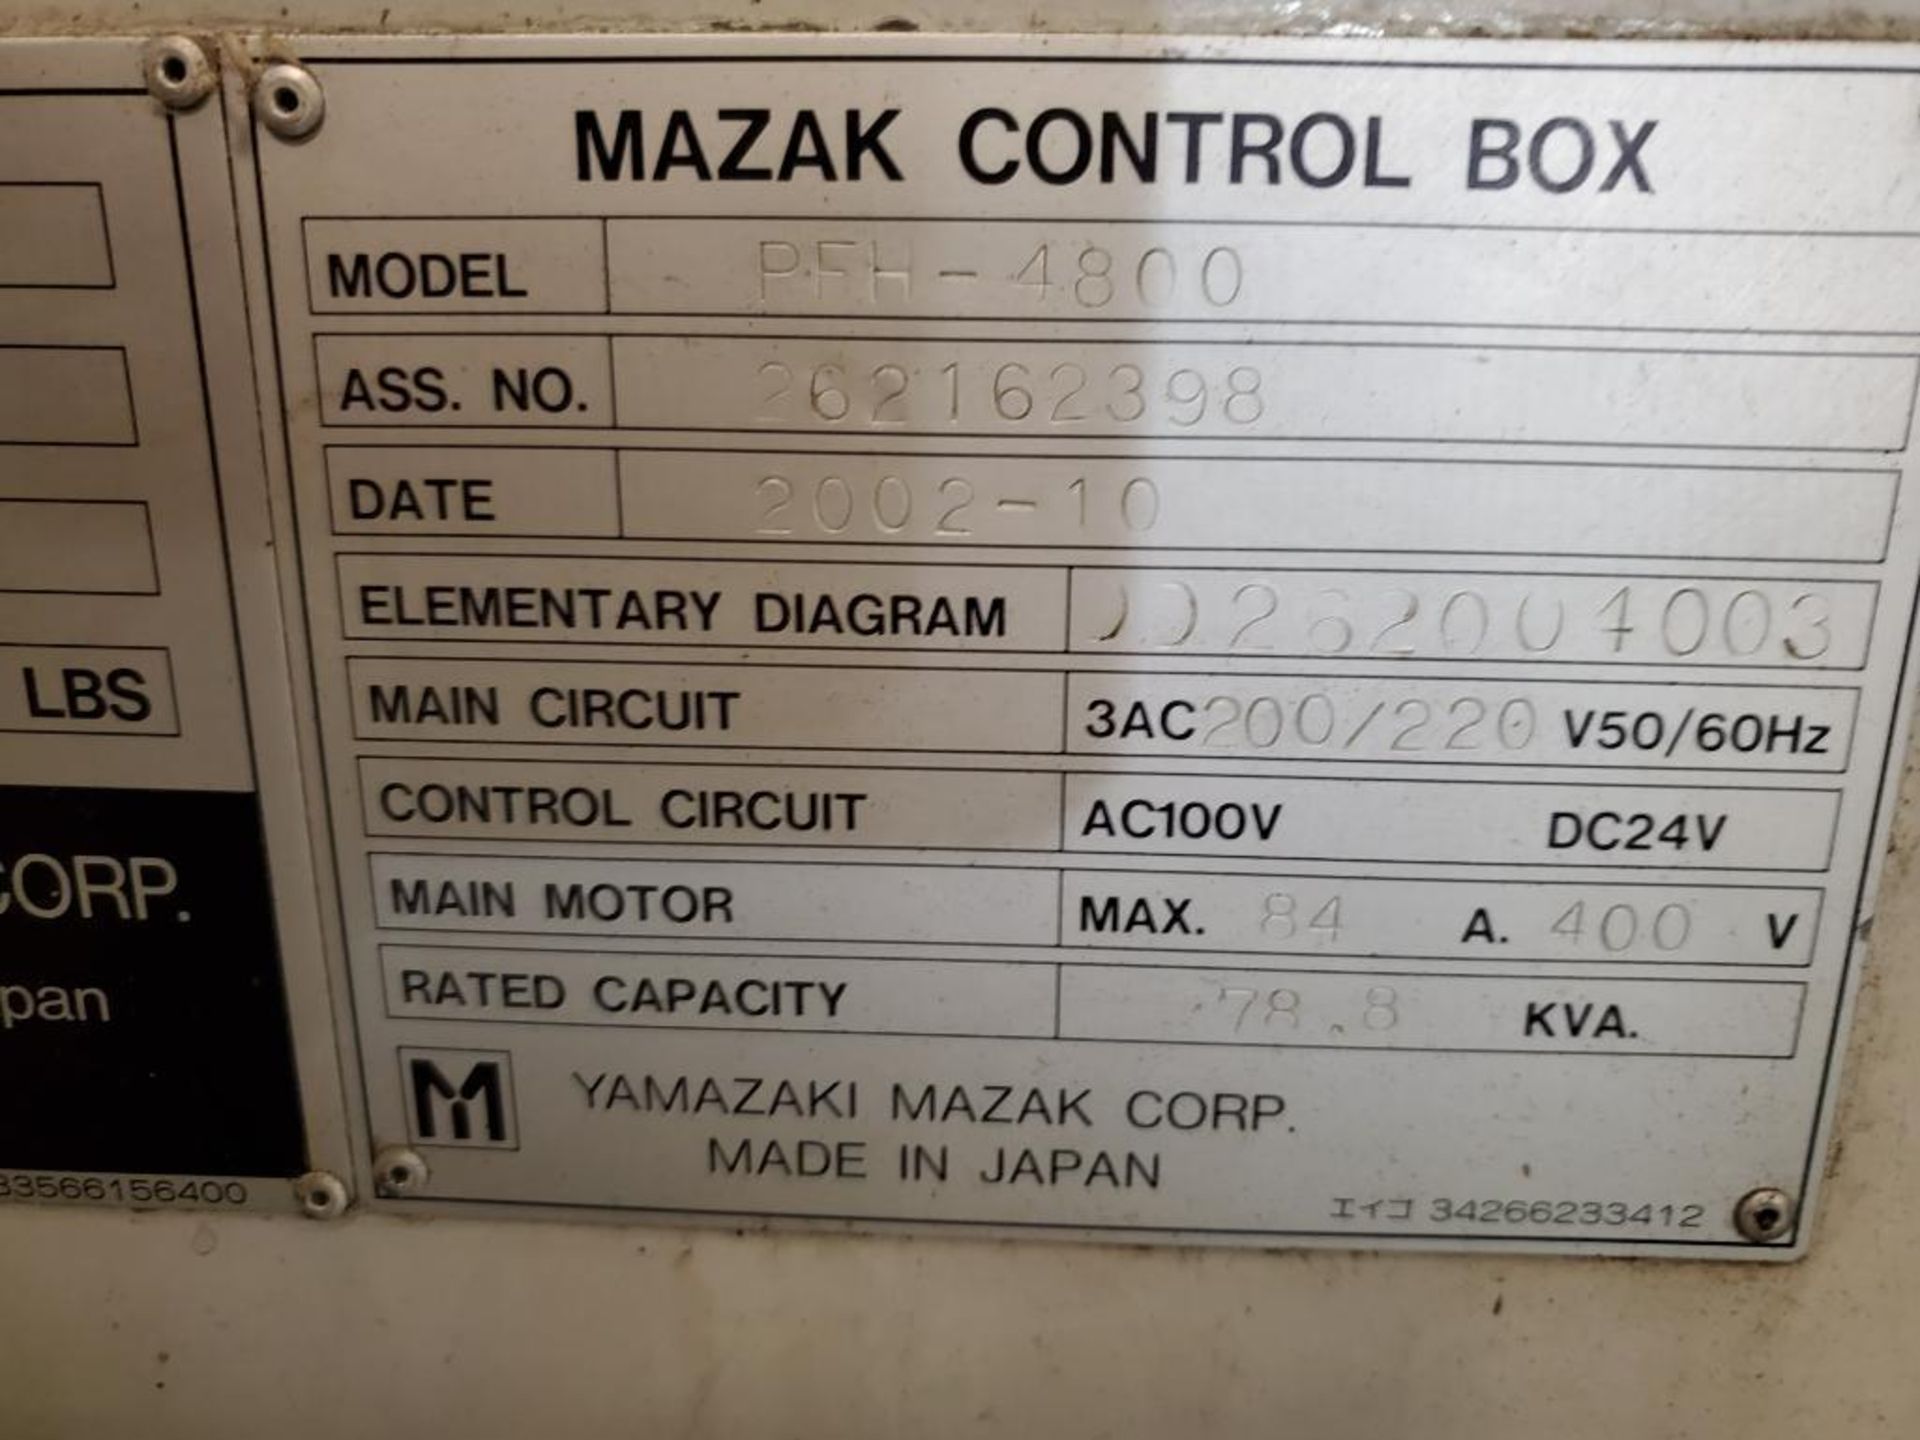 Mazak Machining center. Model PFH-4800. Serial number 162398. Mfg Date 10/02. - Image 15 of 16